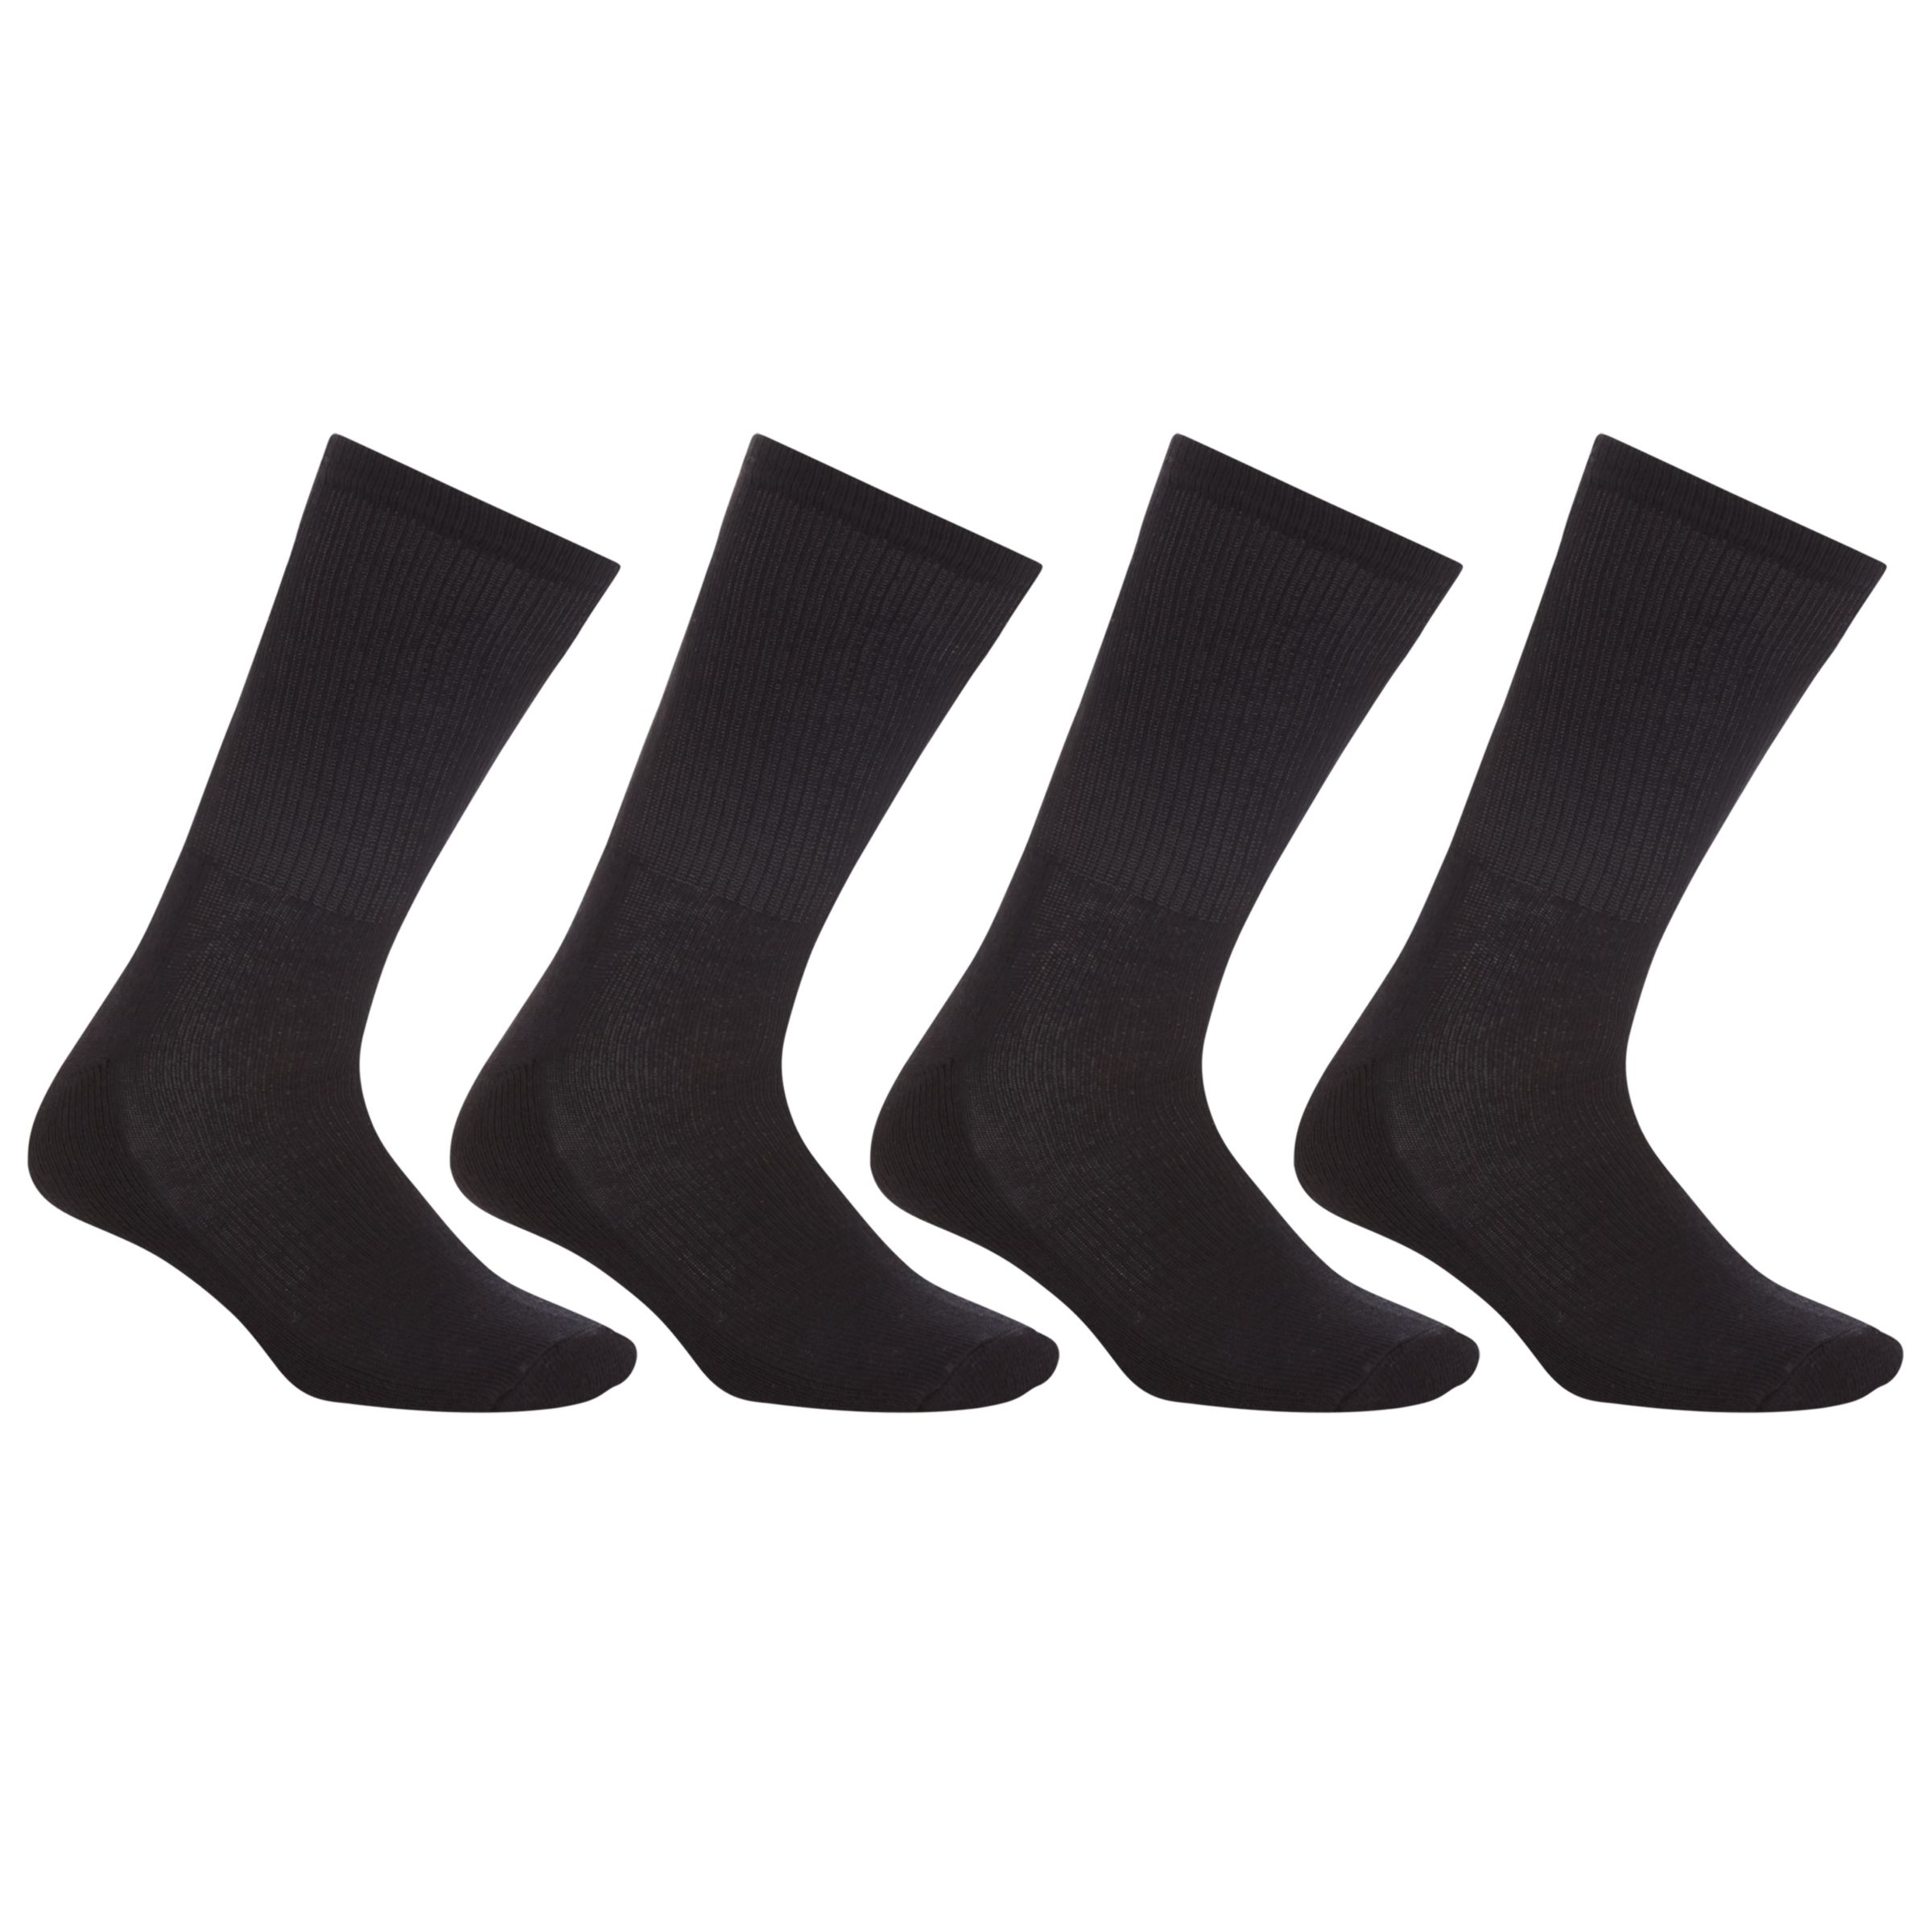 John Lewis & Partners Sport Cushion Sole Socks, Pack of 4, Black, 6-8